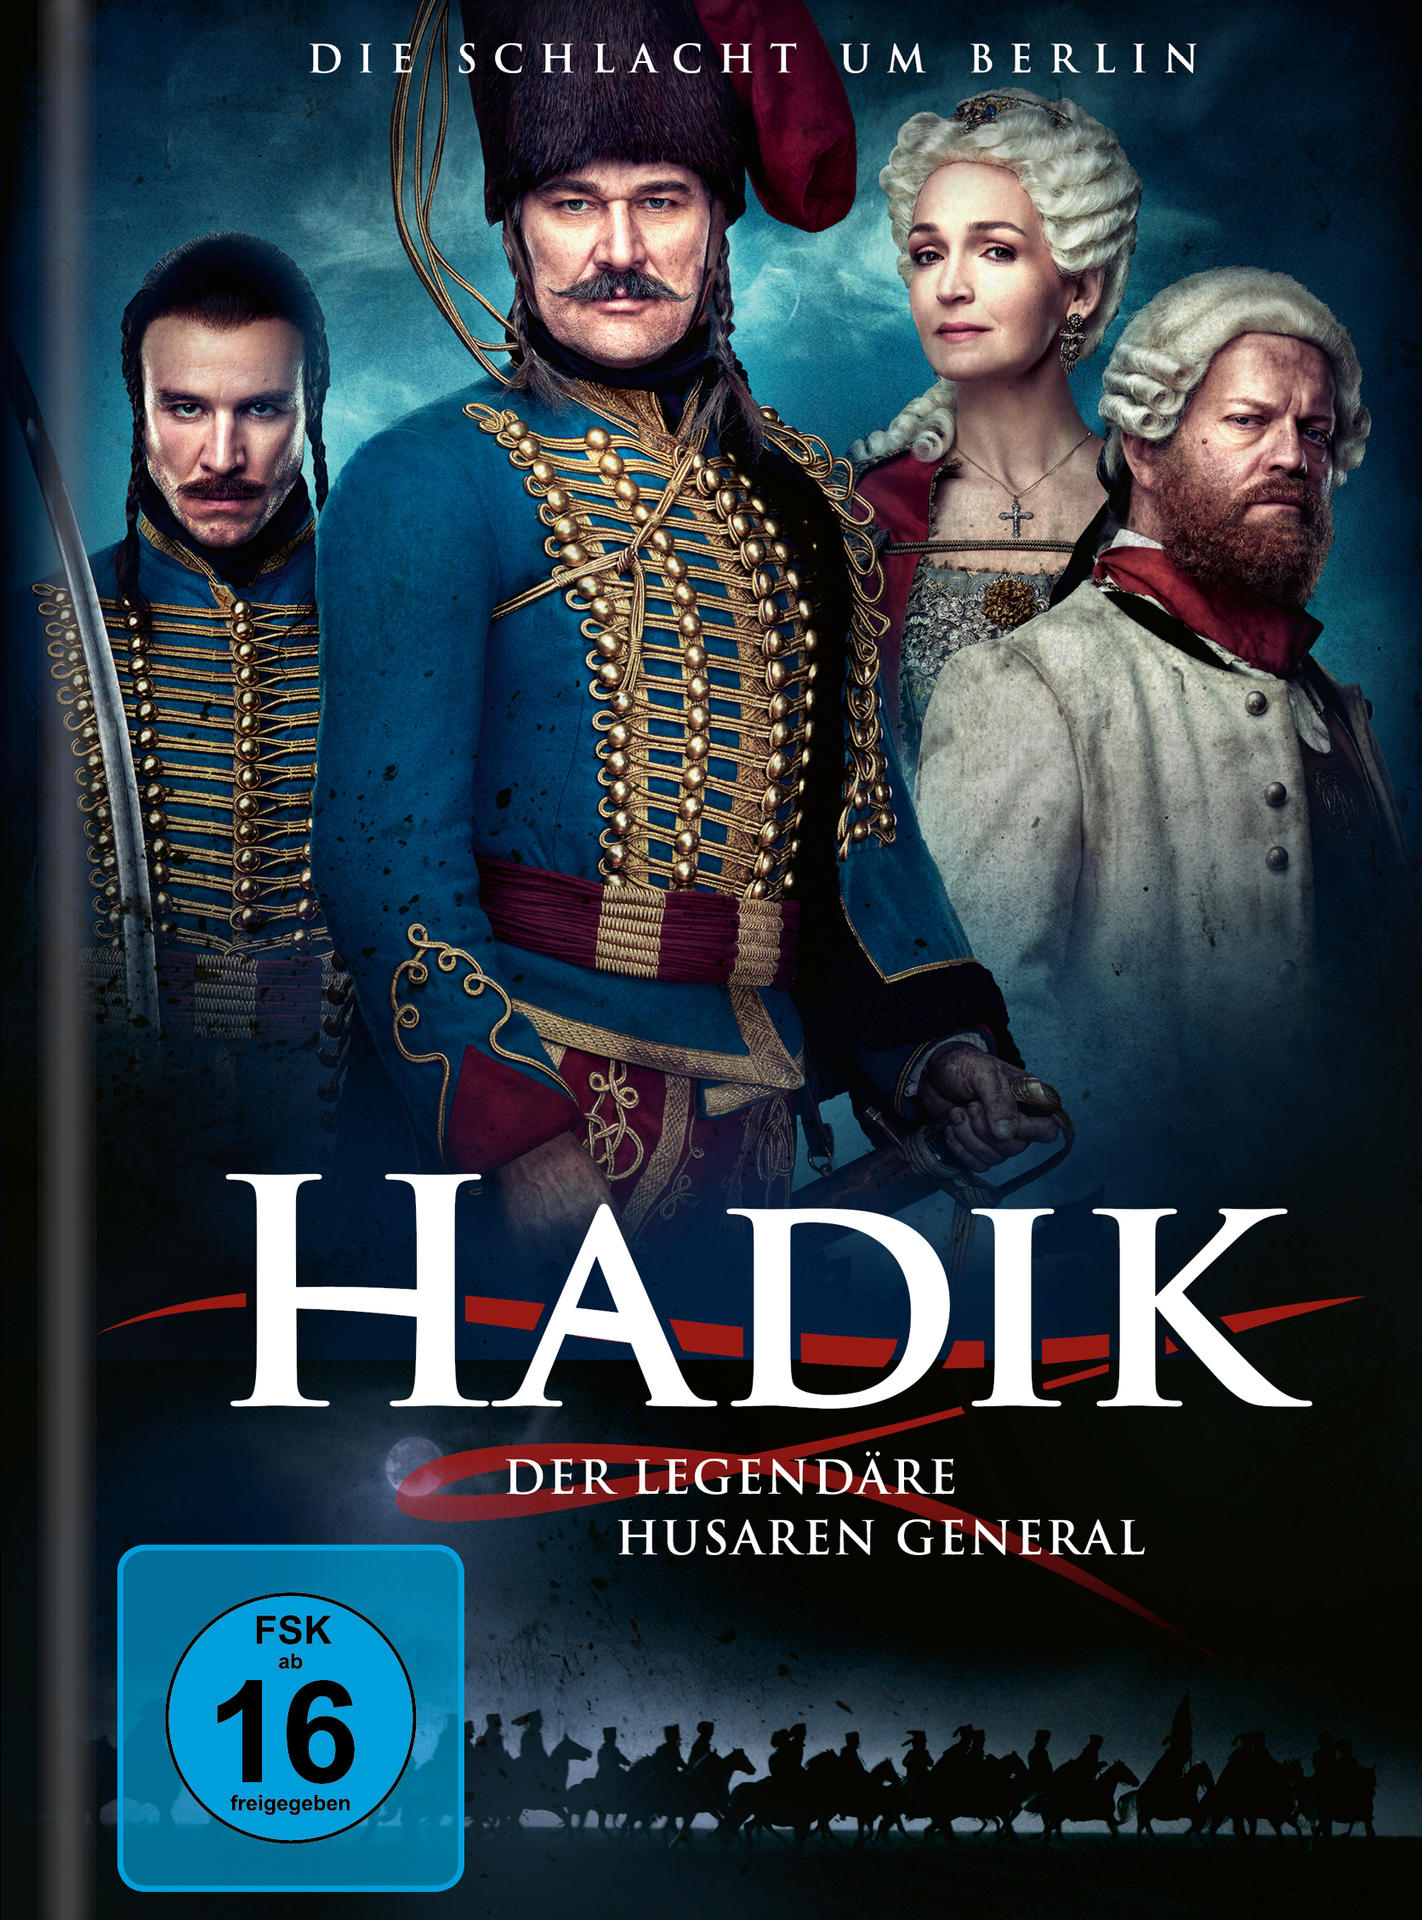 Hadik - Husaren General DVD Legendäre Der + Blu-ray